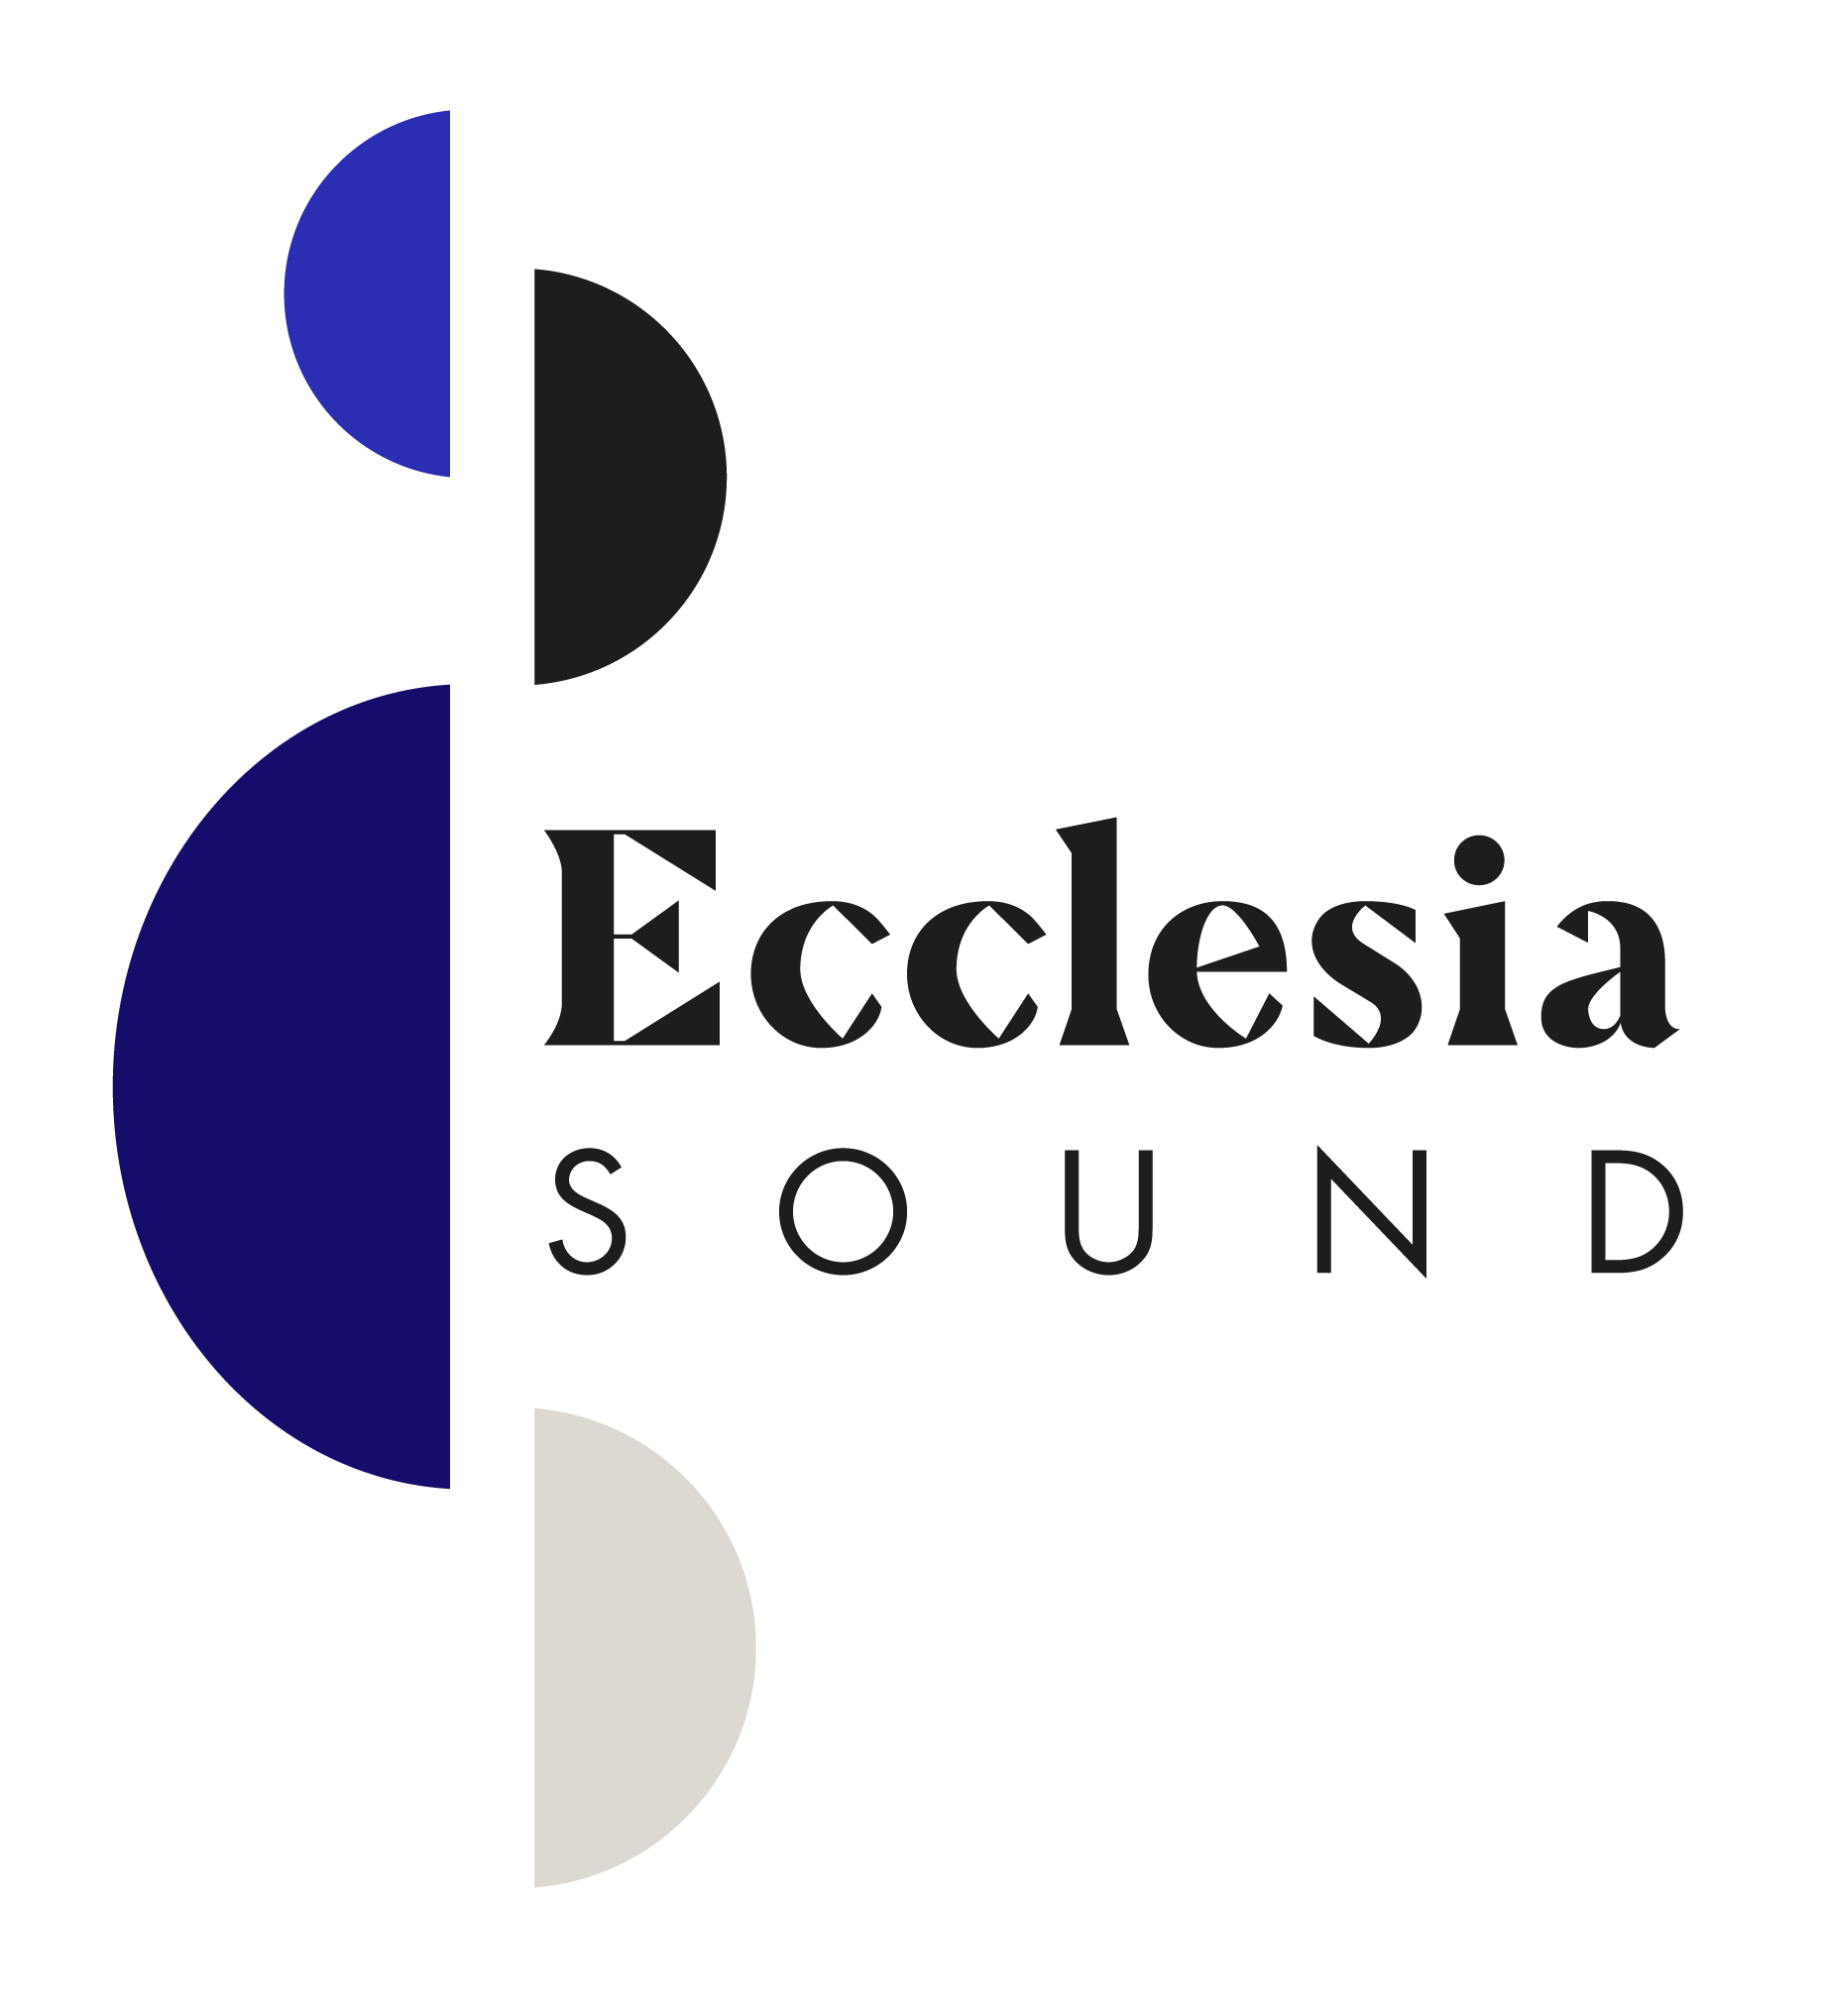 Ecclesia Sound